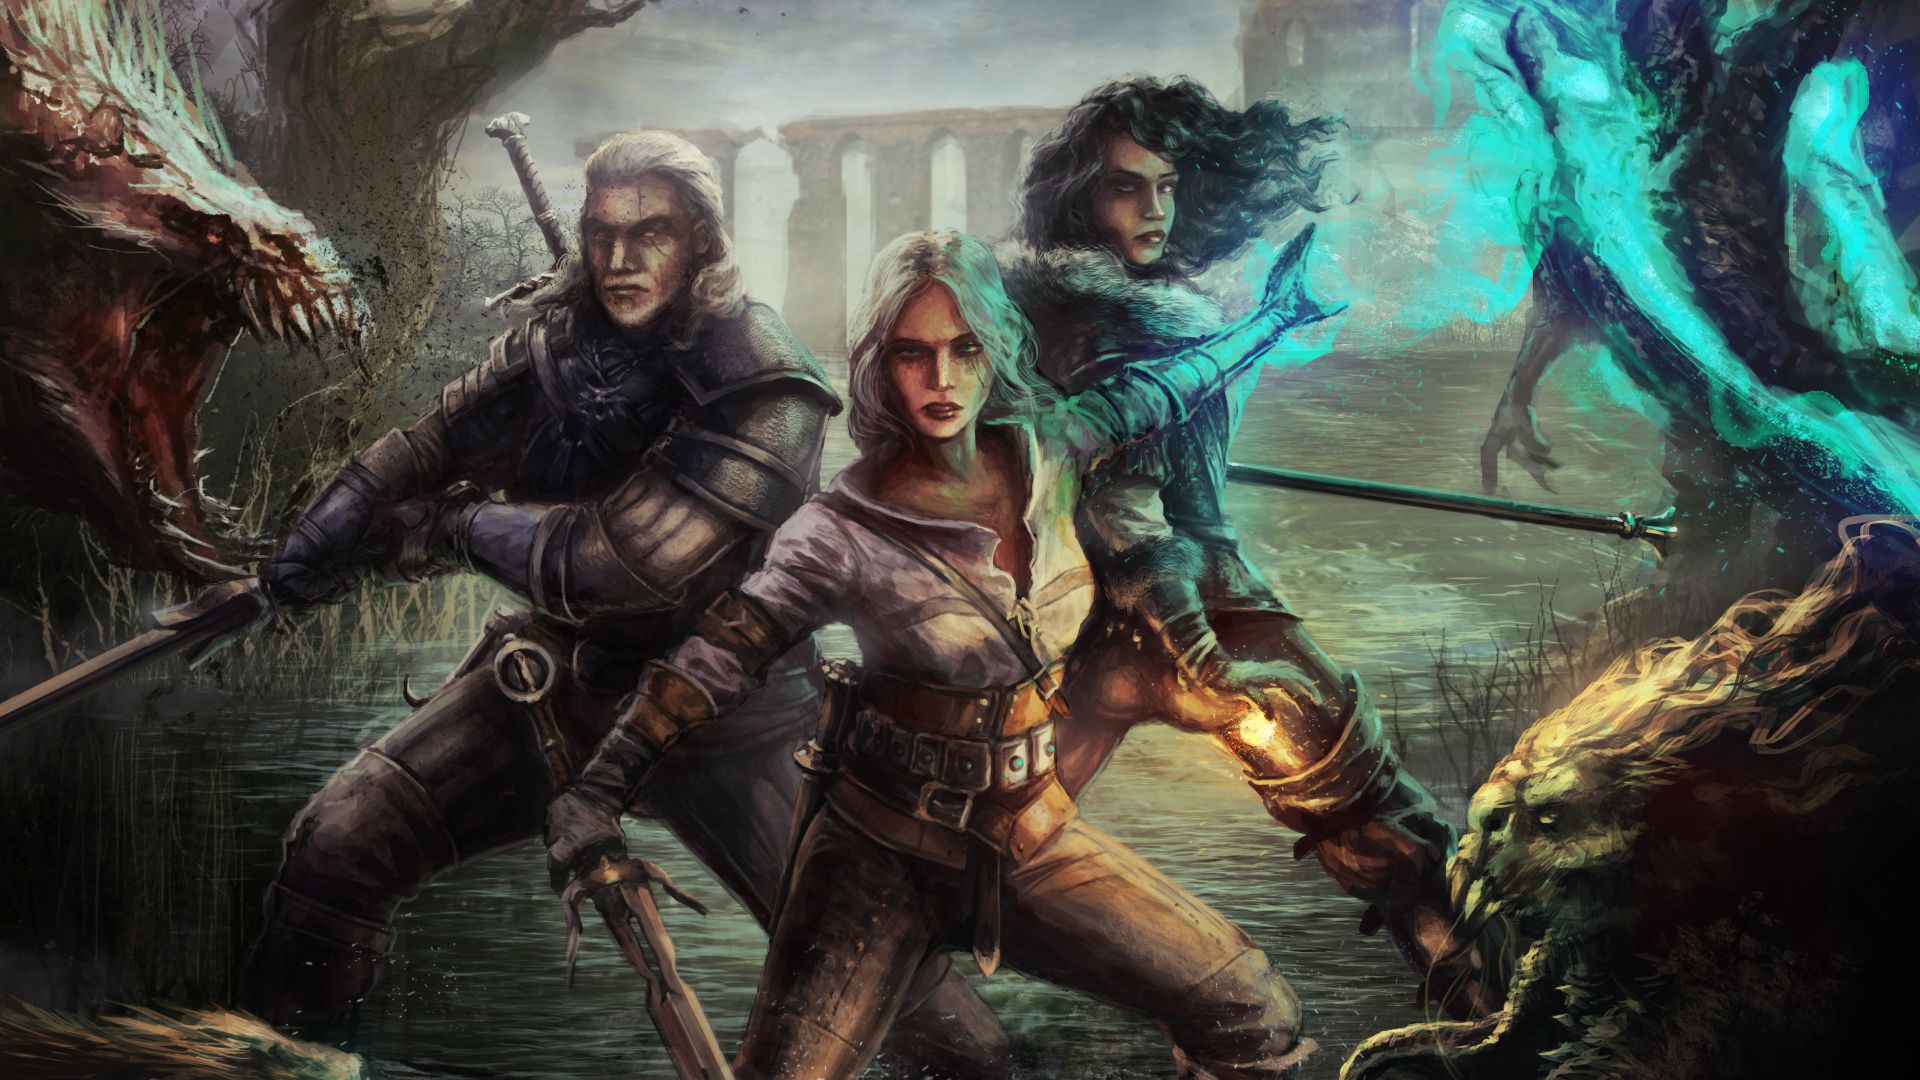 Desktop Wallpaper The Witcher 3: Wild Hunt, Geralt Yen And Ciri, Art, Hd  Image, Picture, Background, 53e574